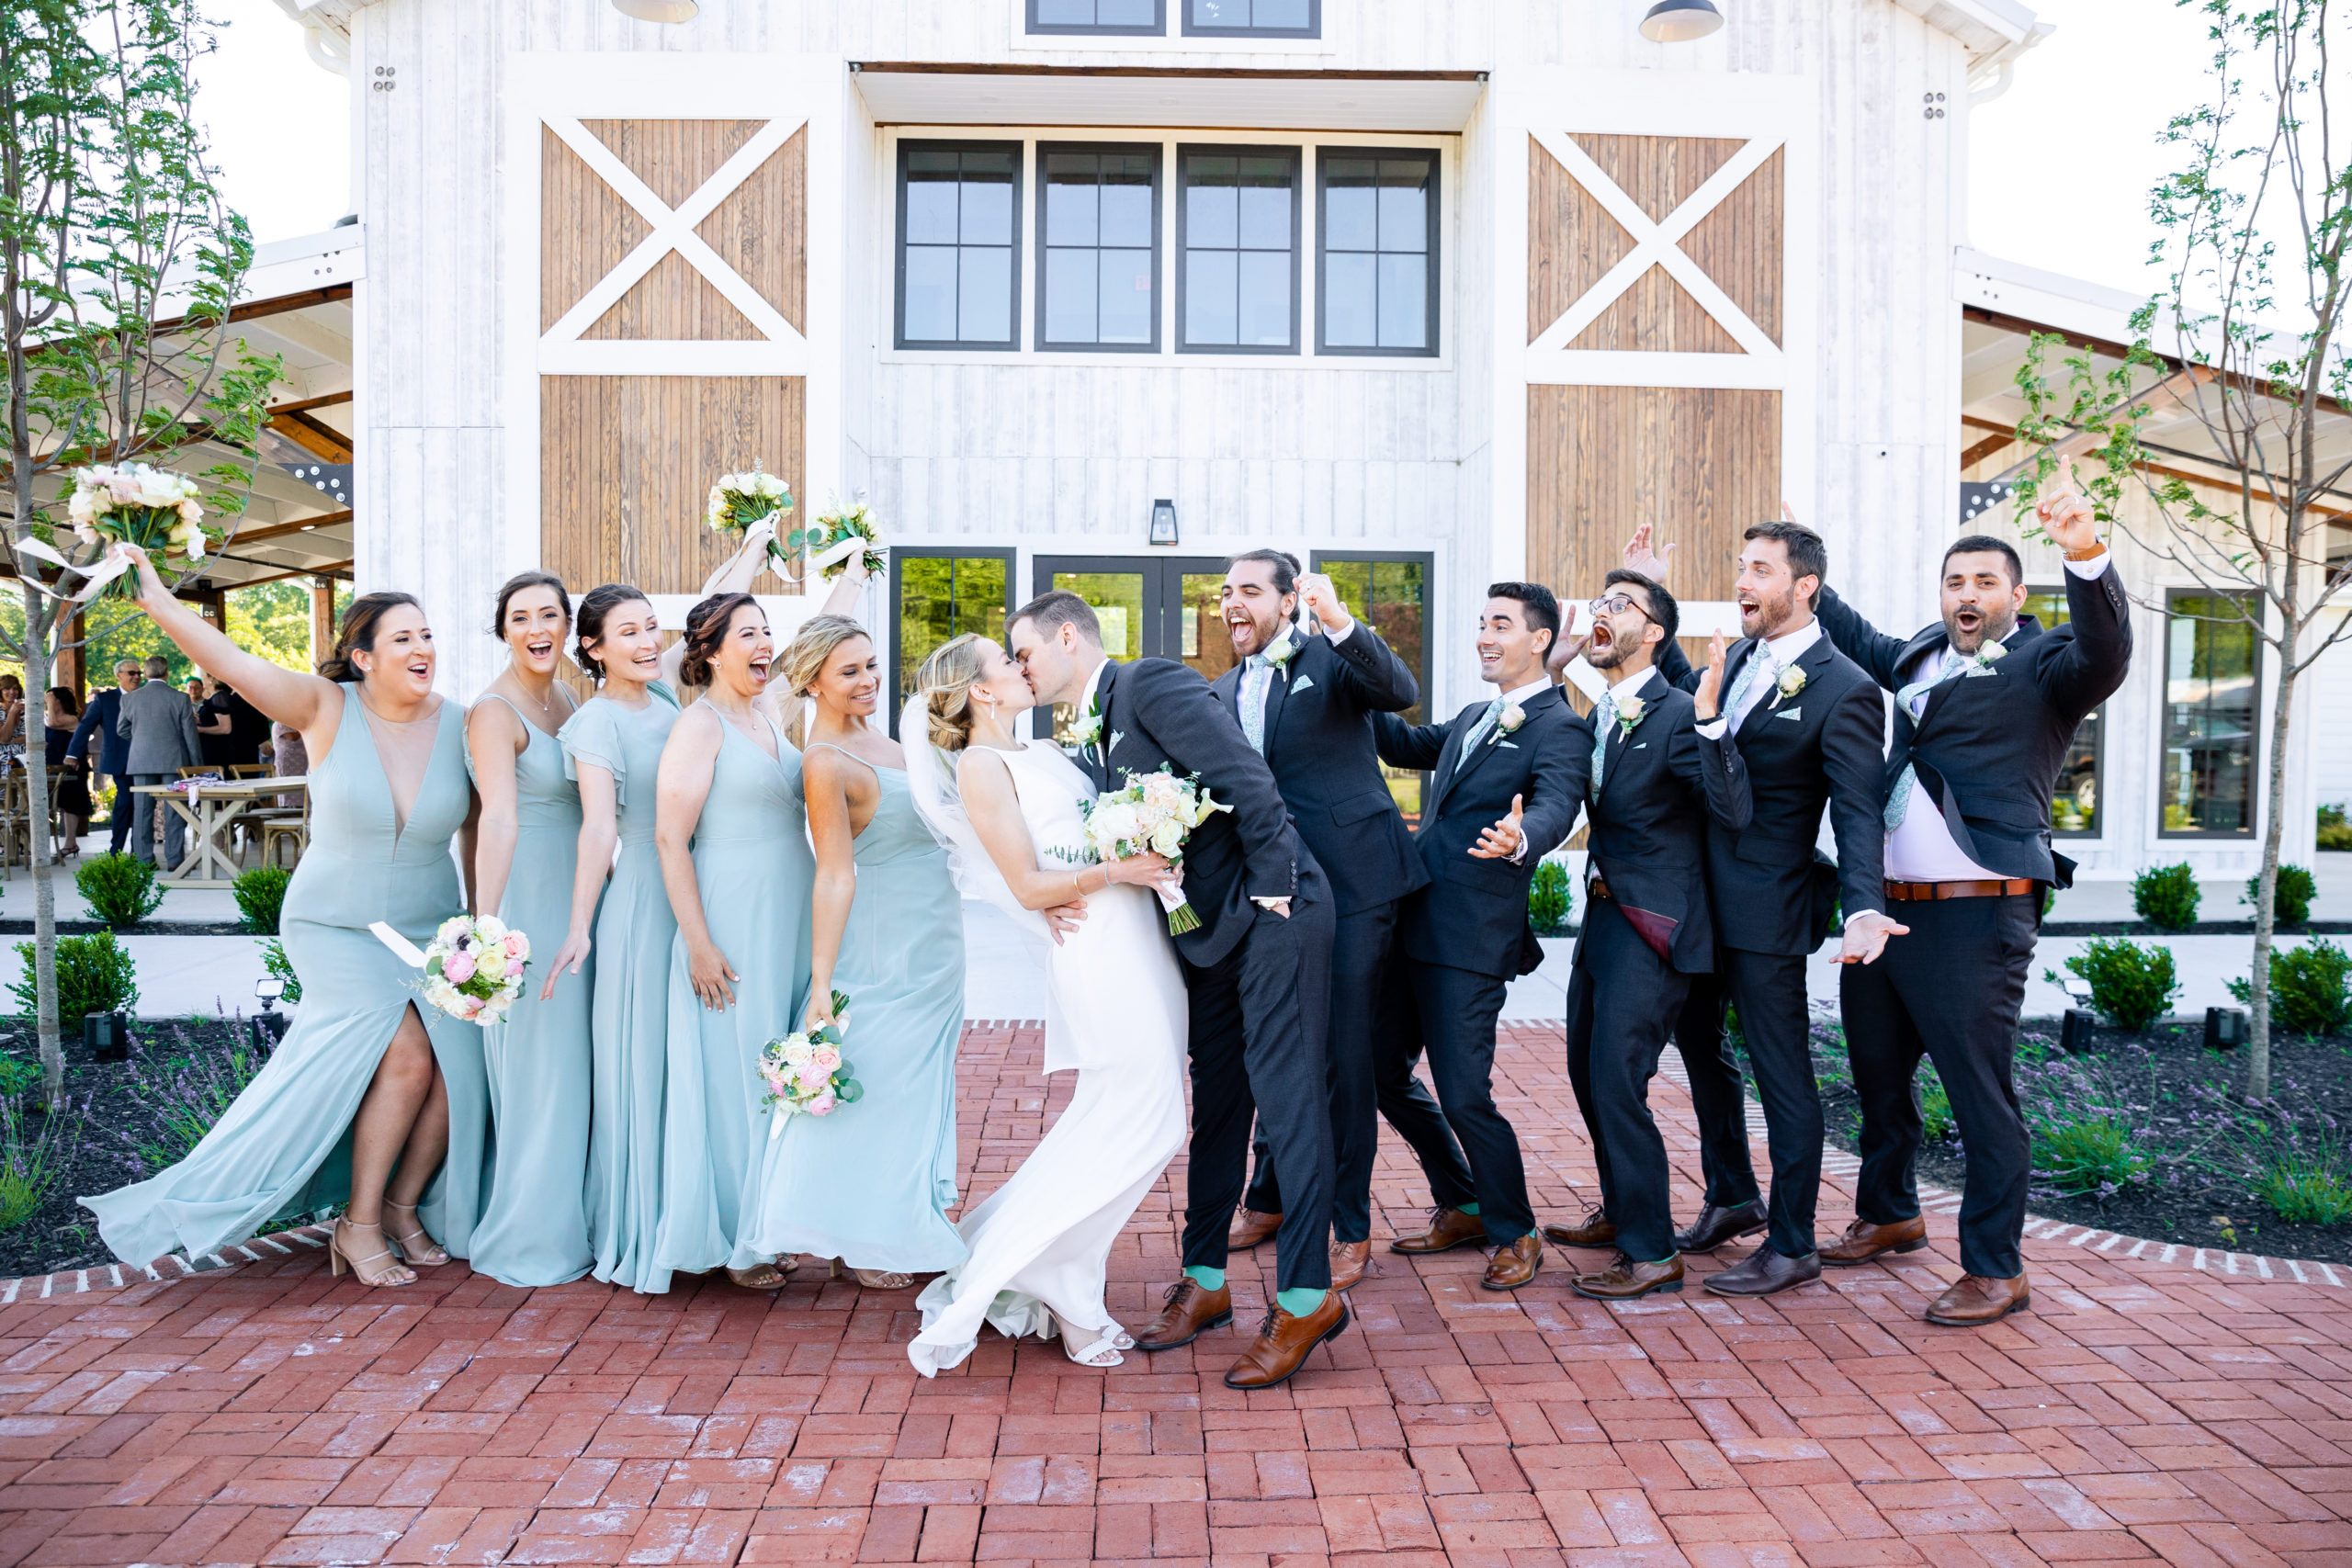 Bridal group portrait - luxury wedding photographs from Kent Island Resort wedding in June - DMV Wedding Photographer, Luxury Wedding Photographer